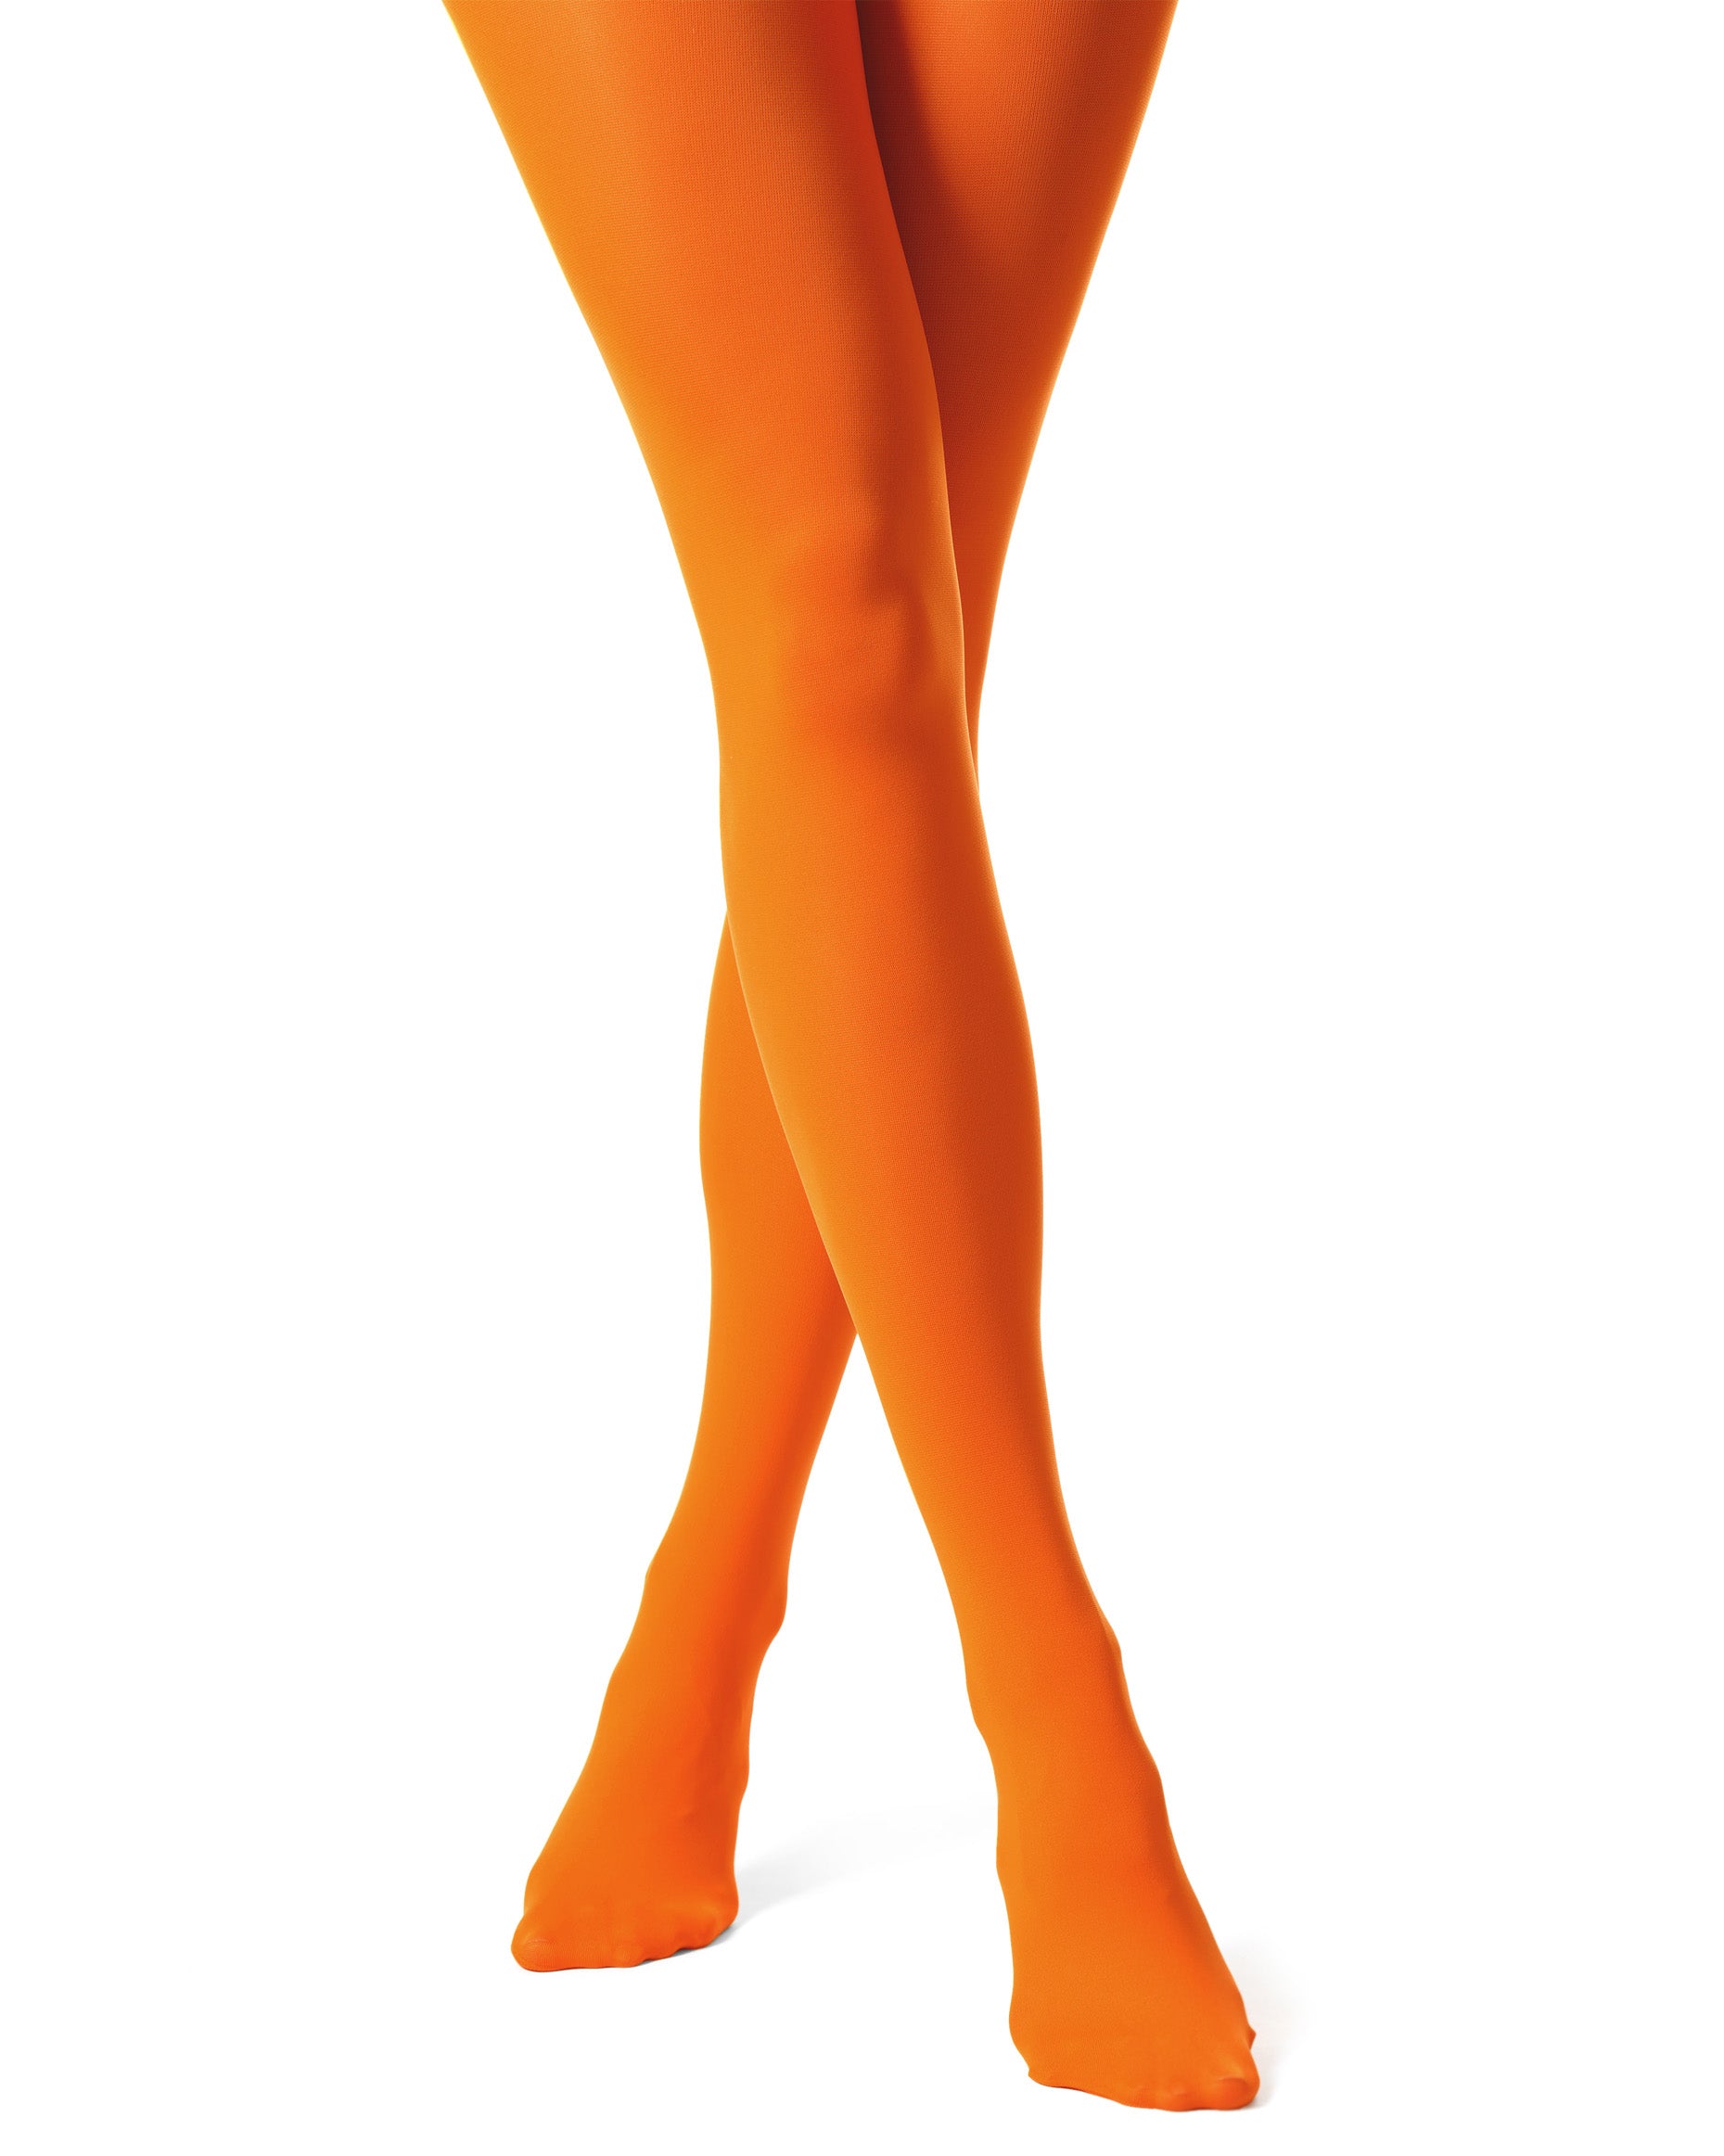 Trasparenze Sophie 70 Collant - coloured opaque tights in orange (arancio)